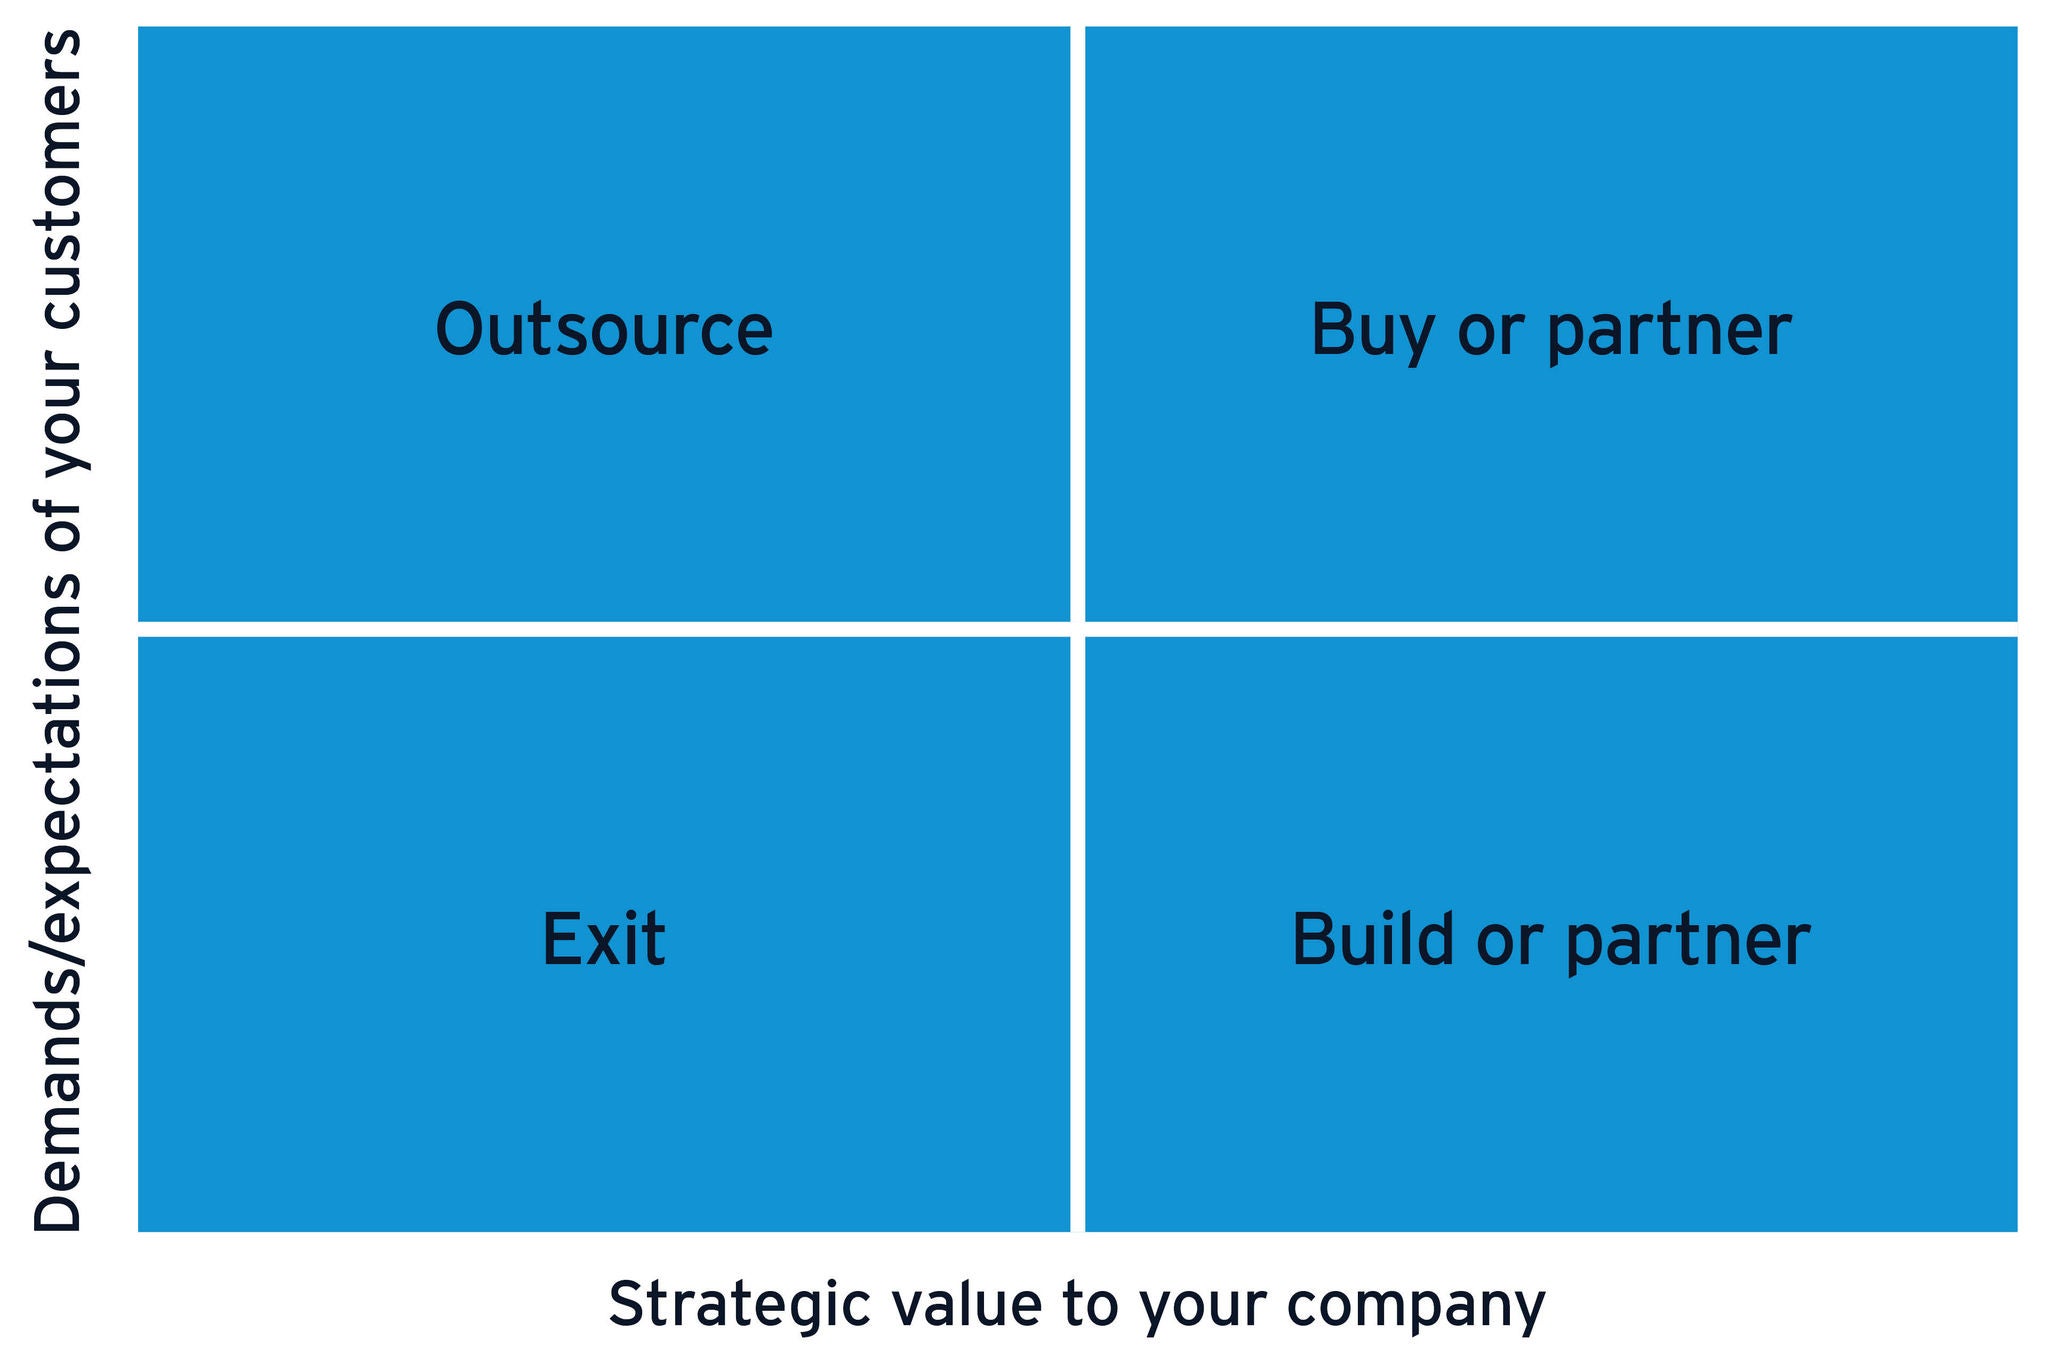 Strategic value to your company chart